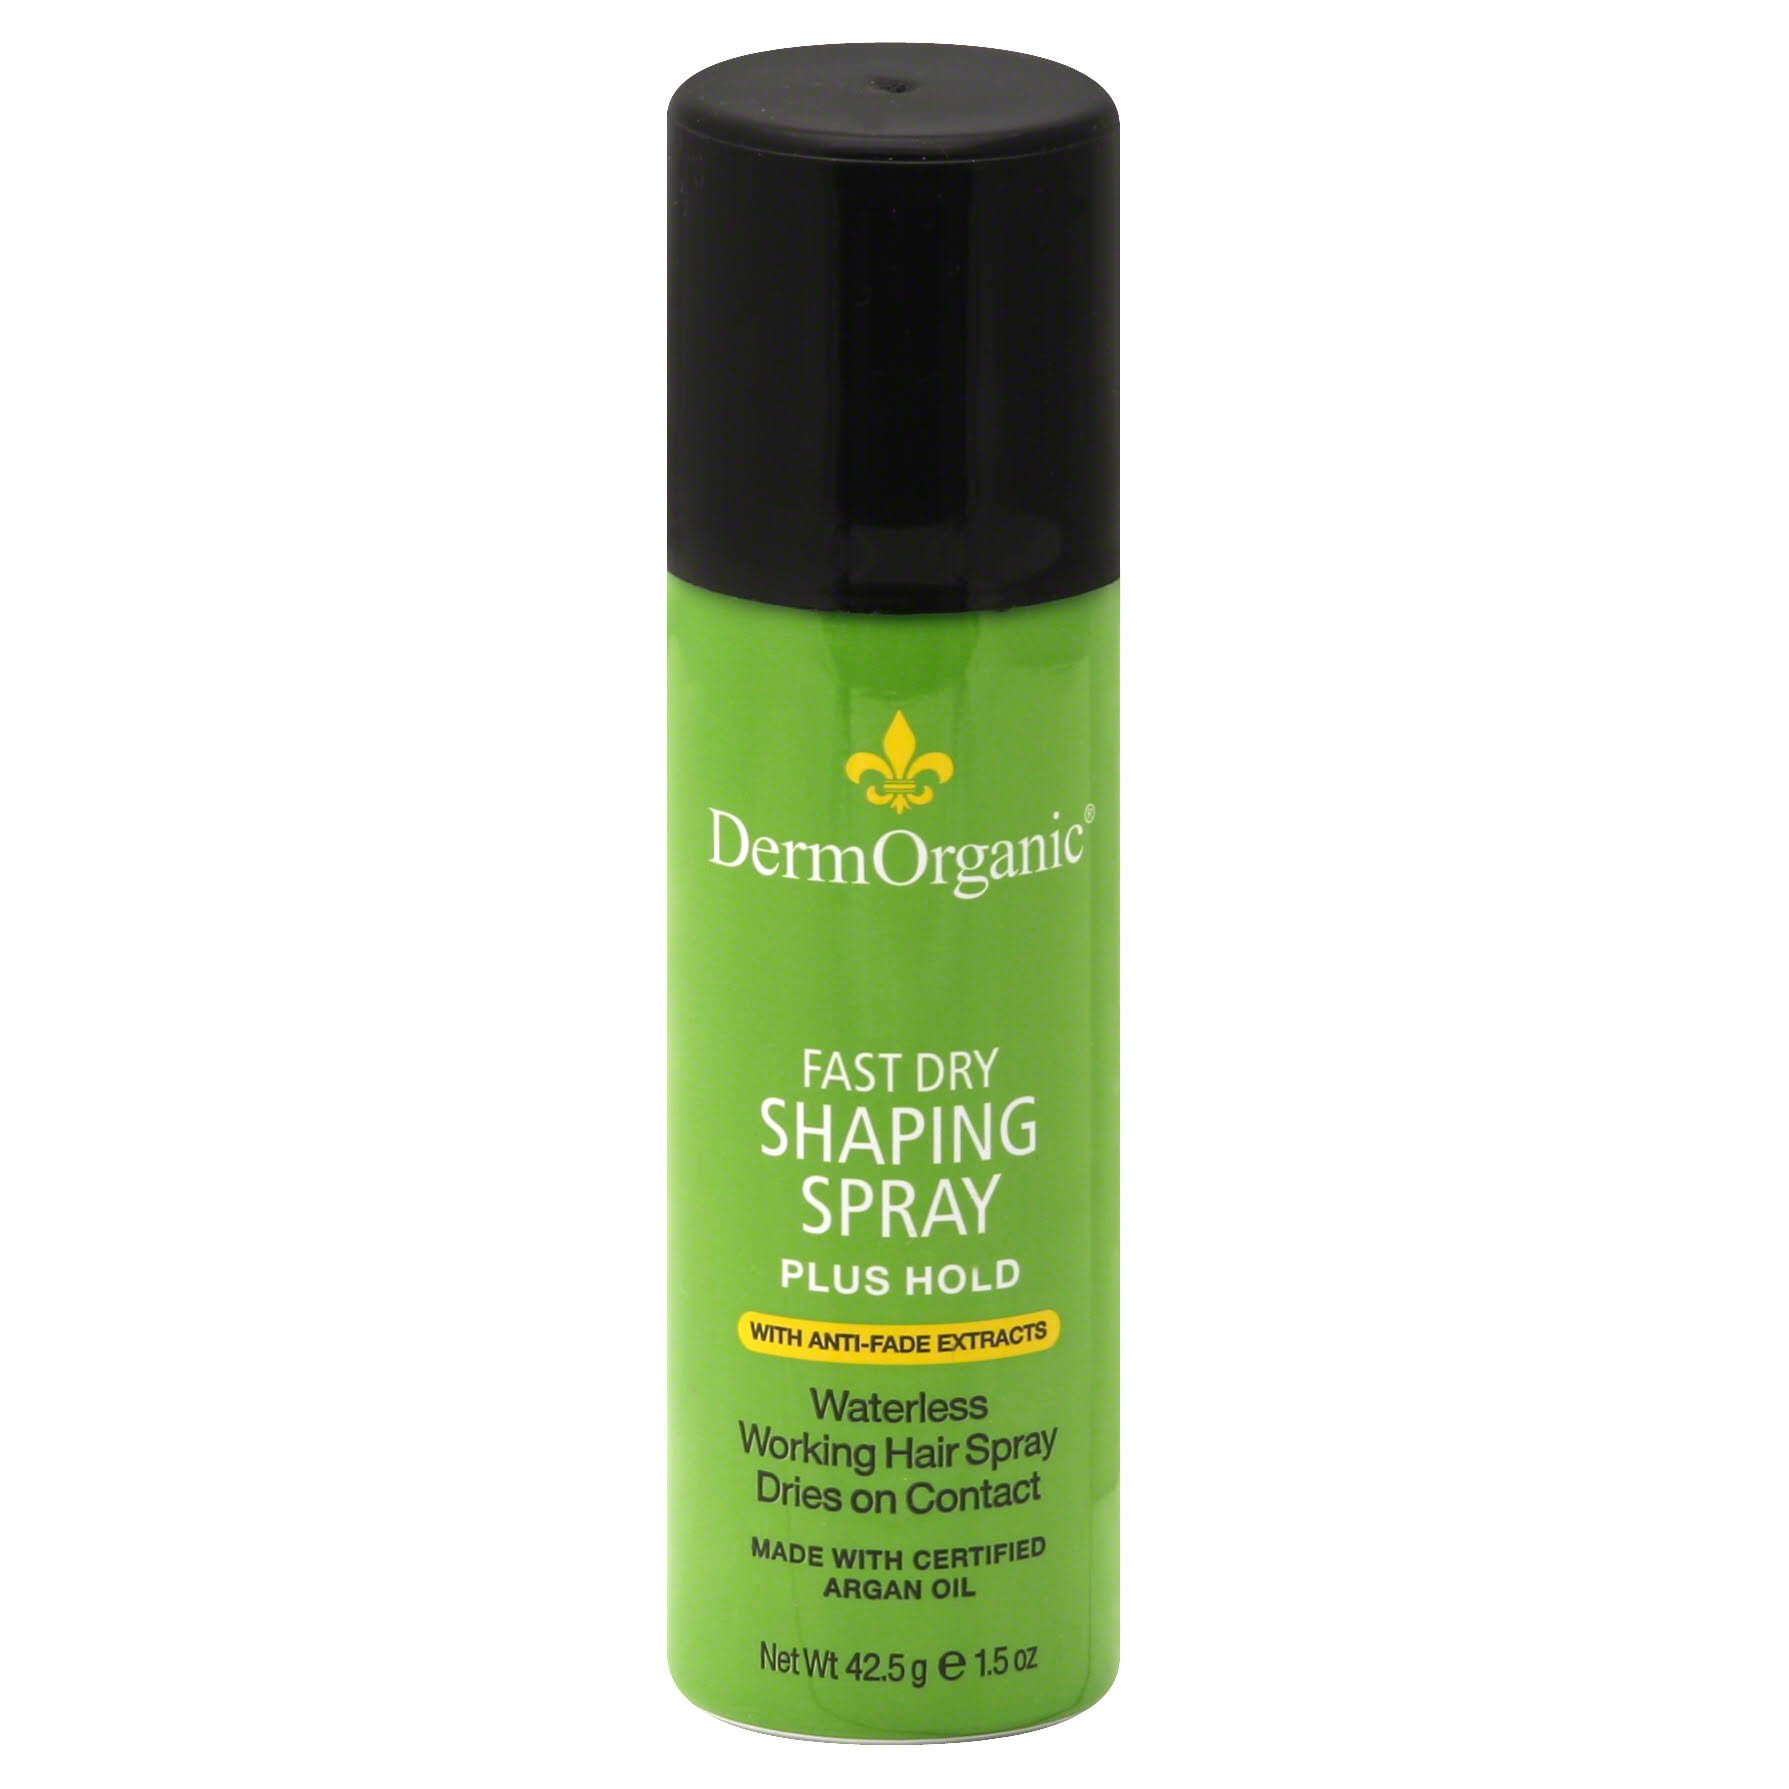 DermOrganic Fast Dry Shaping Spray with Argan OilHair SprayDERMORGANICSize: 1.5 oz